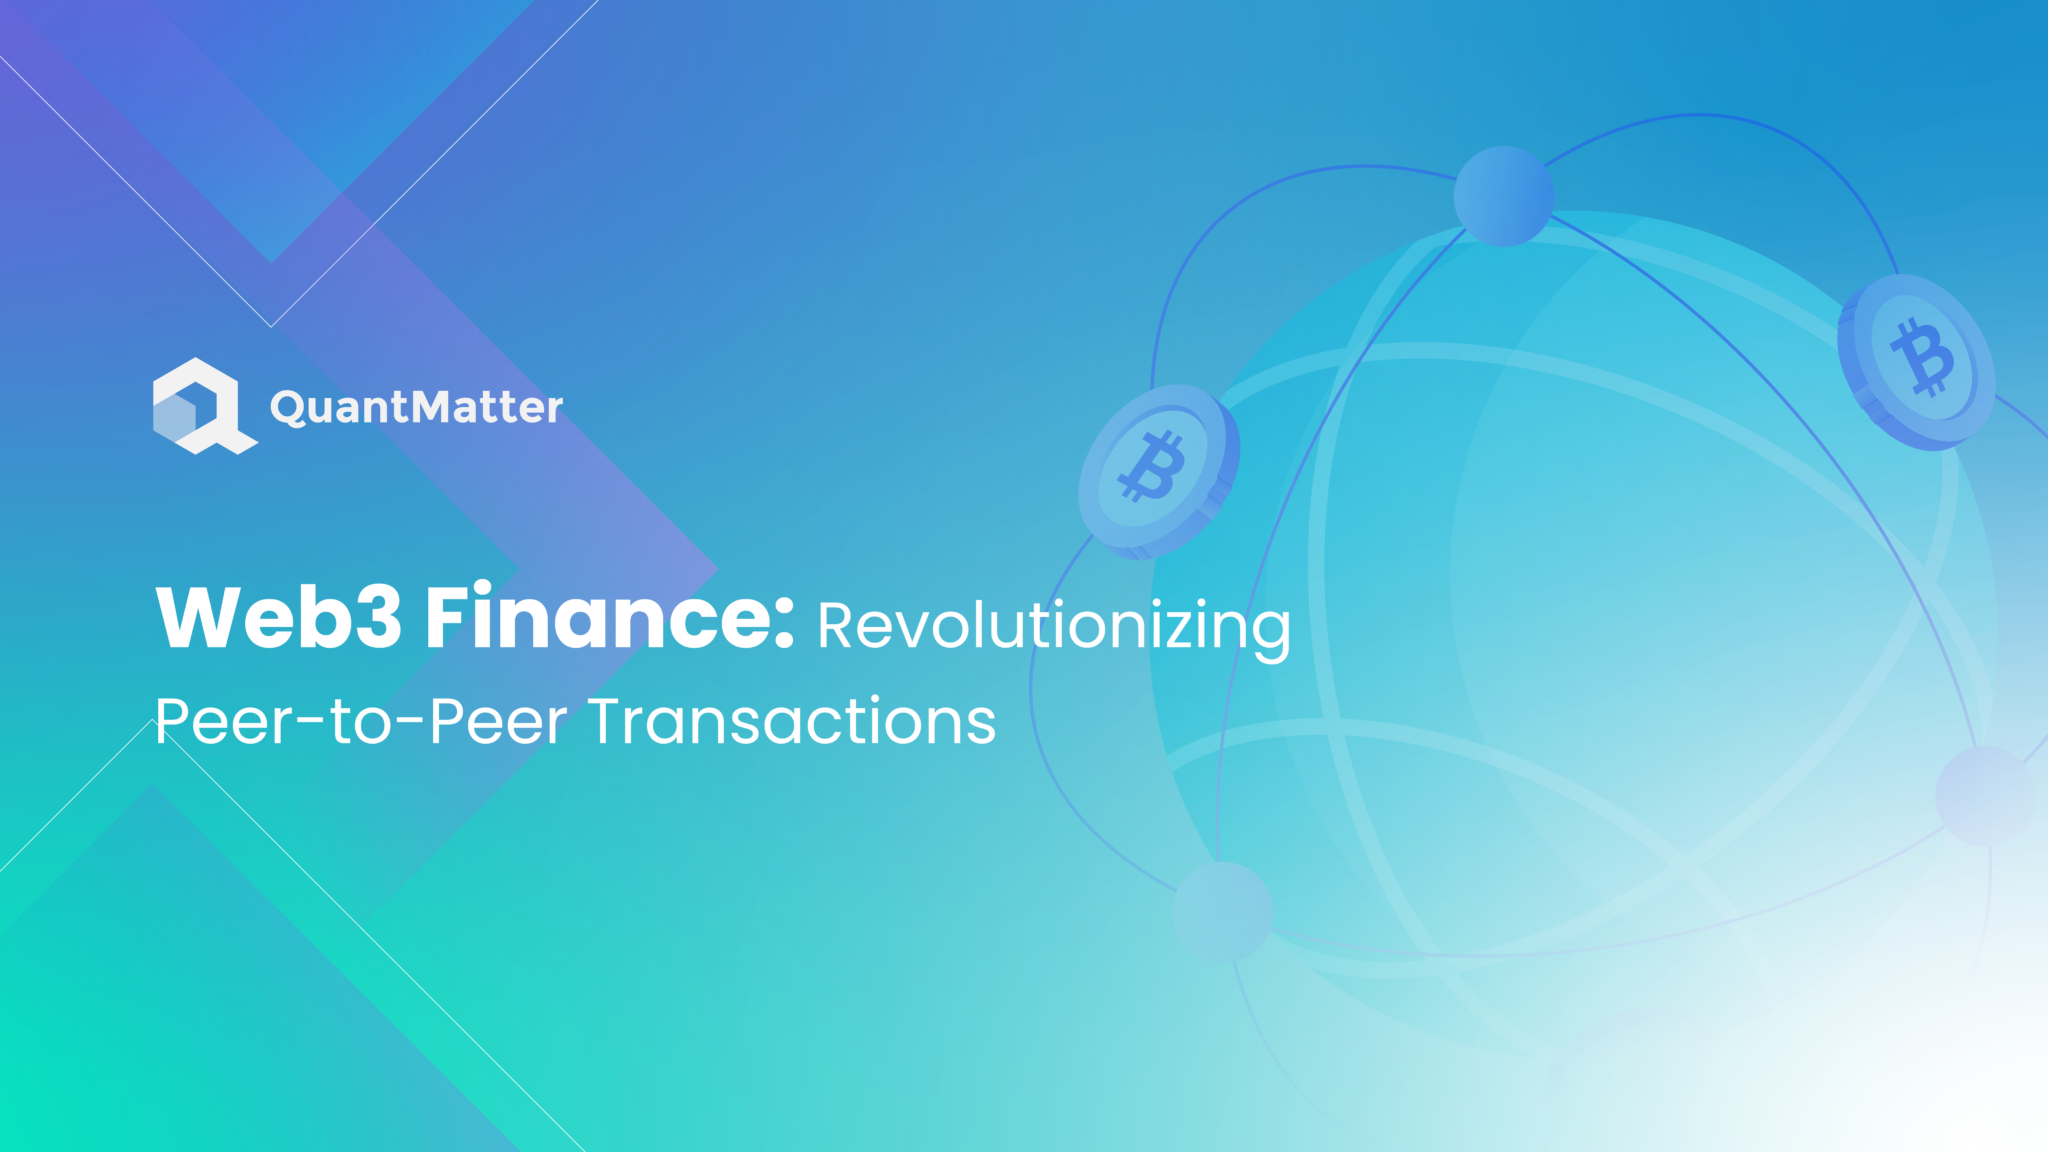 Web3 Finance: Revolutionizing Peer-to-Peer Transactions